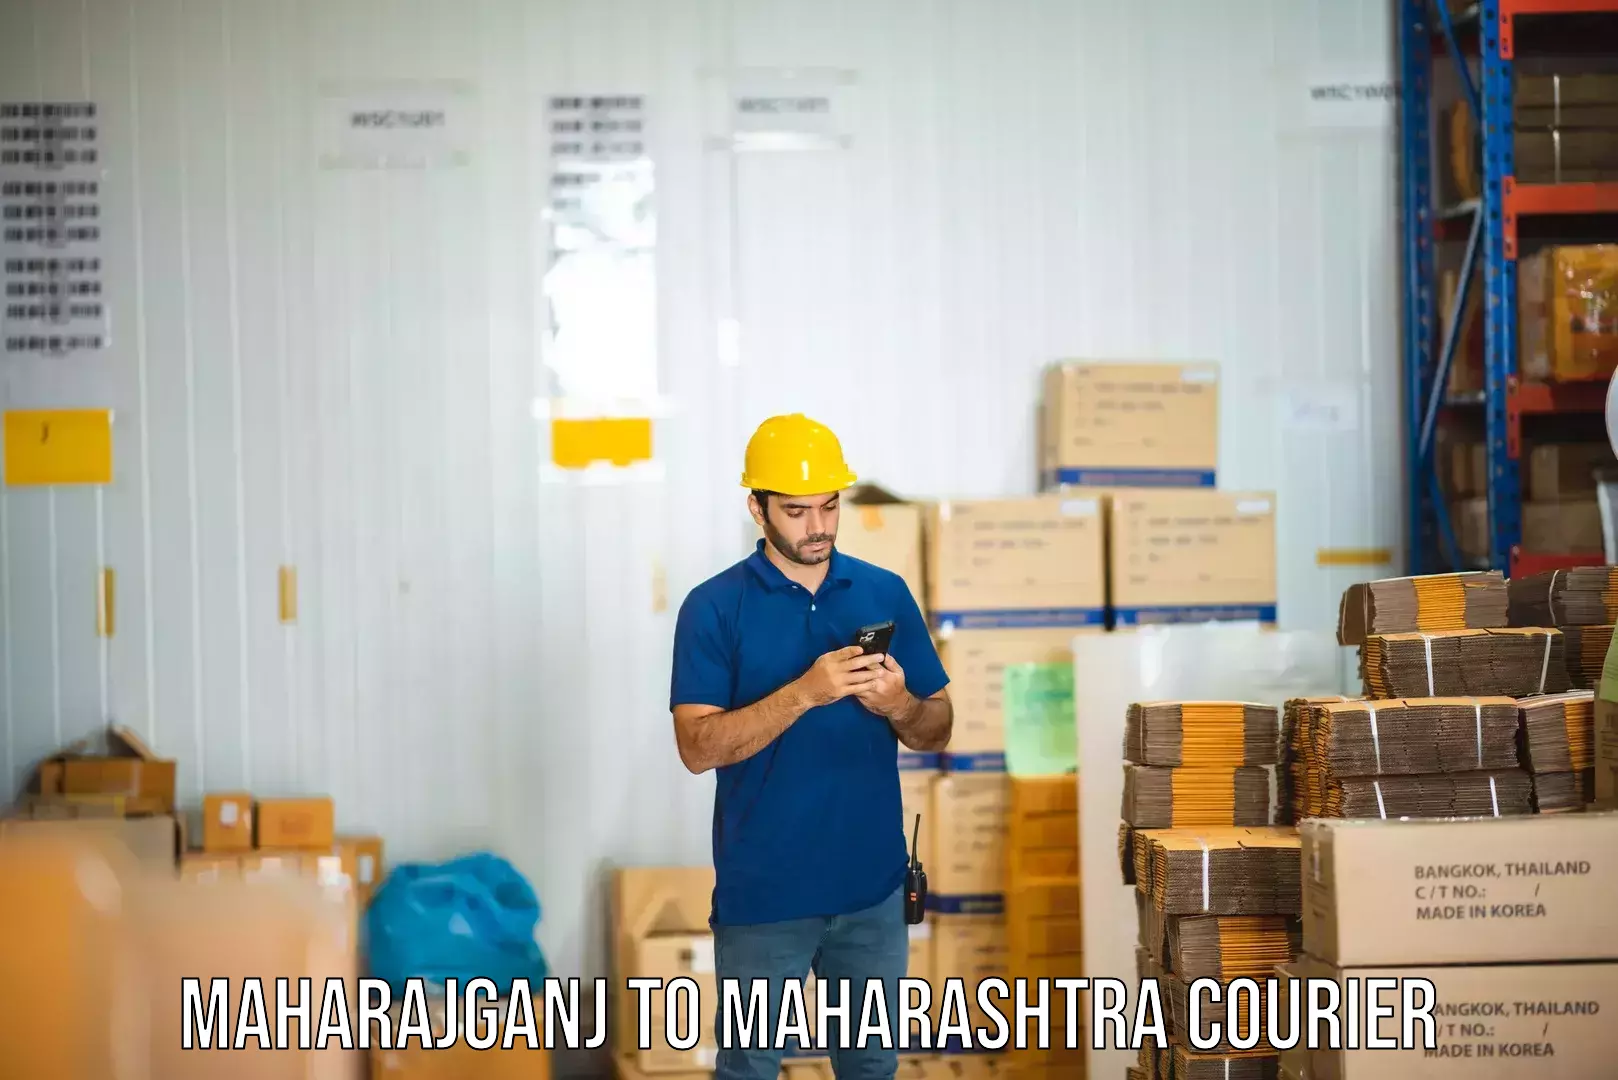 Nationwide delivery network Maharajganj to Maharashtra